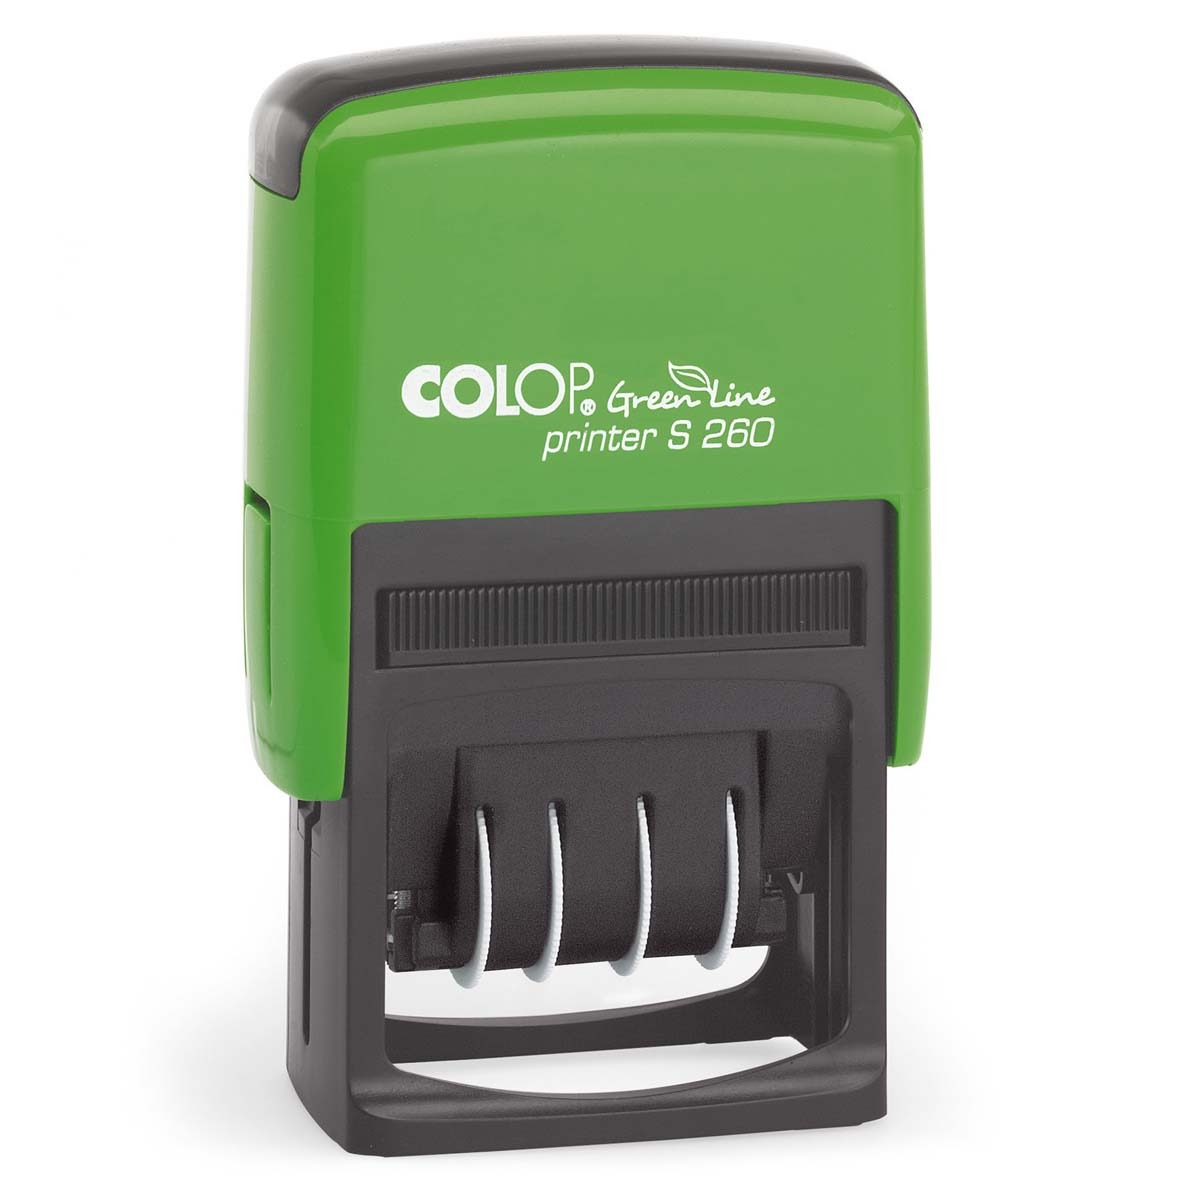 Colop Printer S260 Green Line datumstempel | Bureaustempels.be